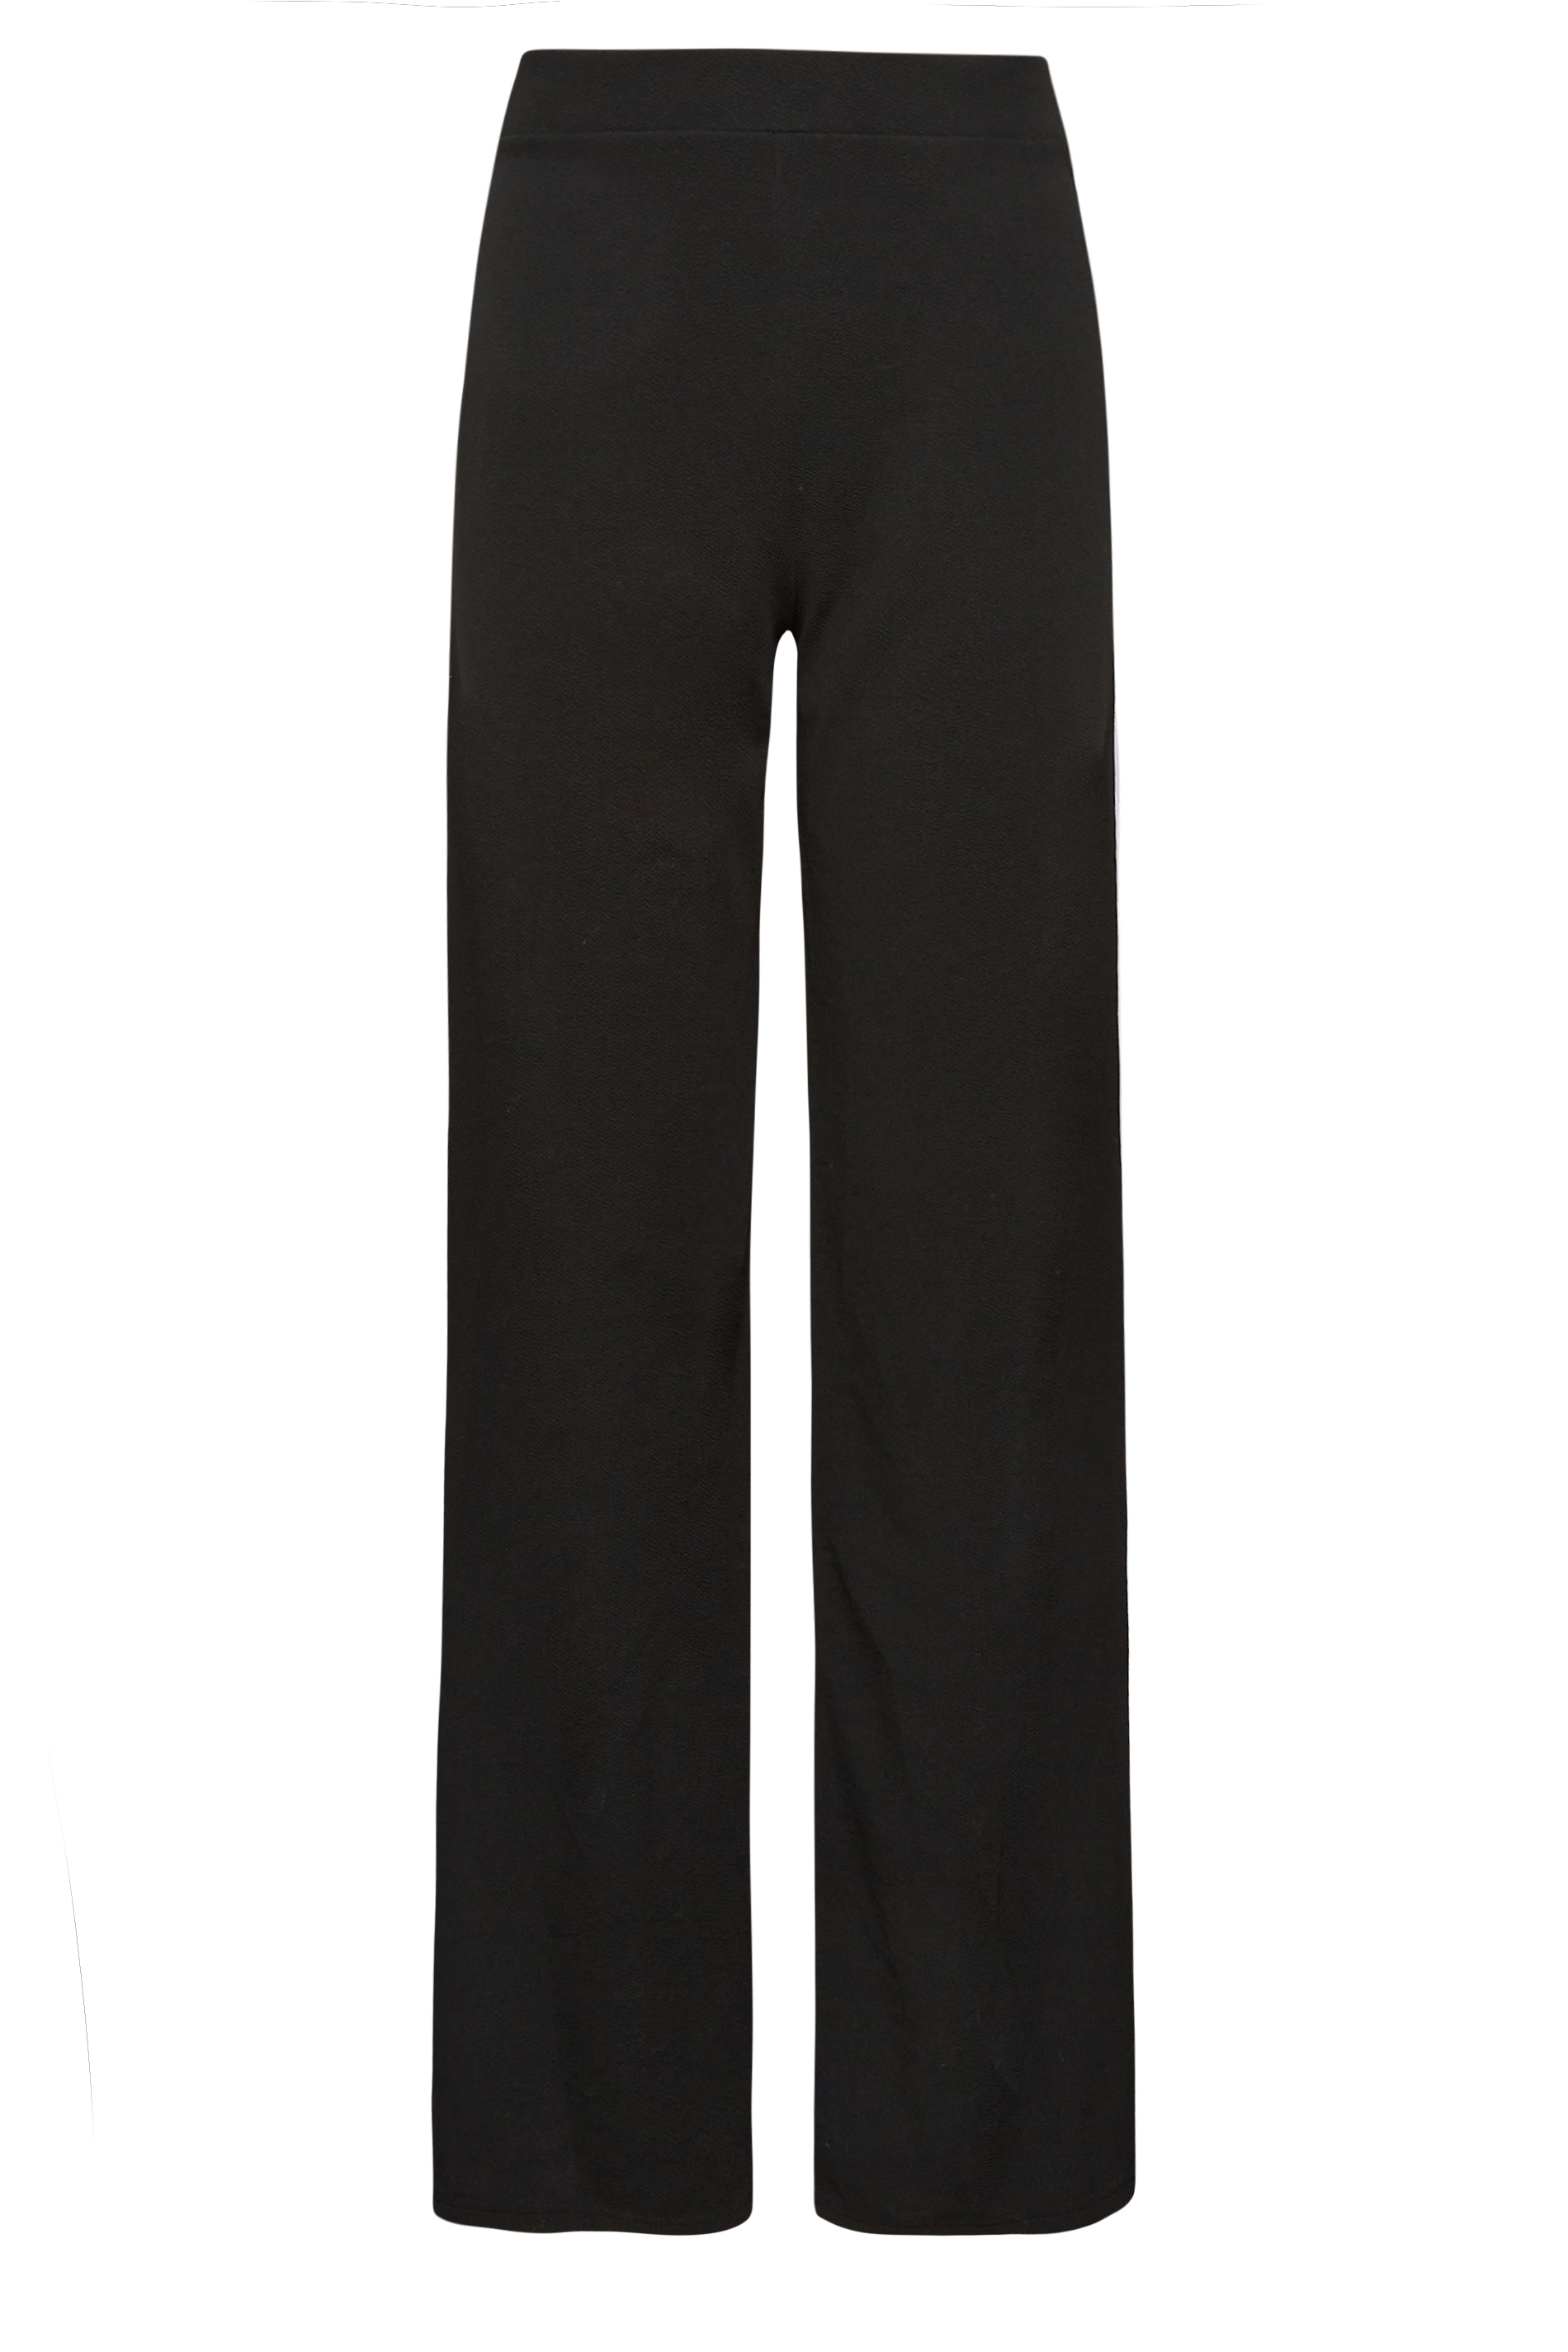 Buy Boden Dark Blue Chrome Kew Side Stripe Trousers from the Next UK online  shop